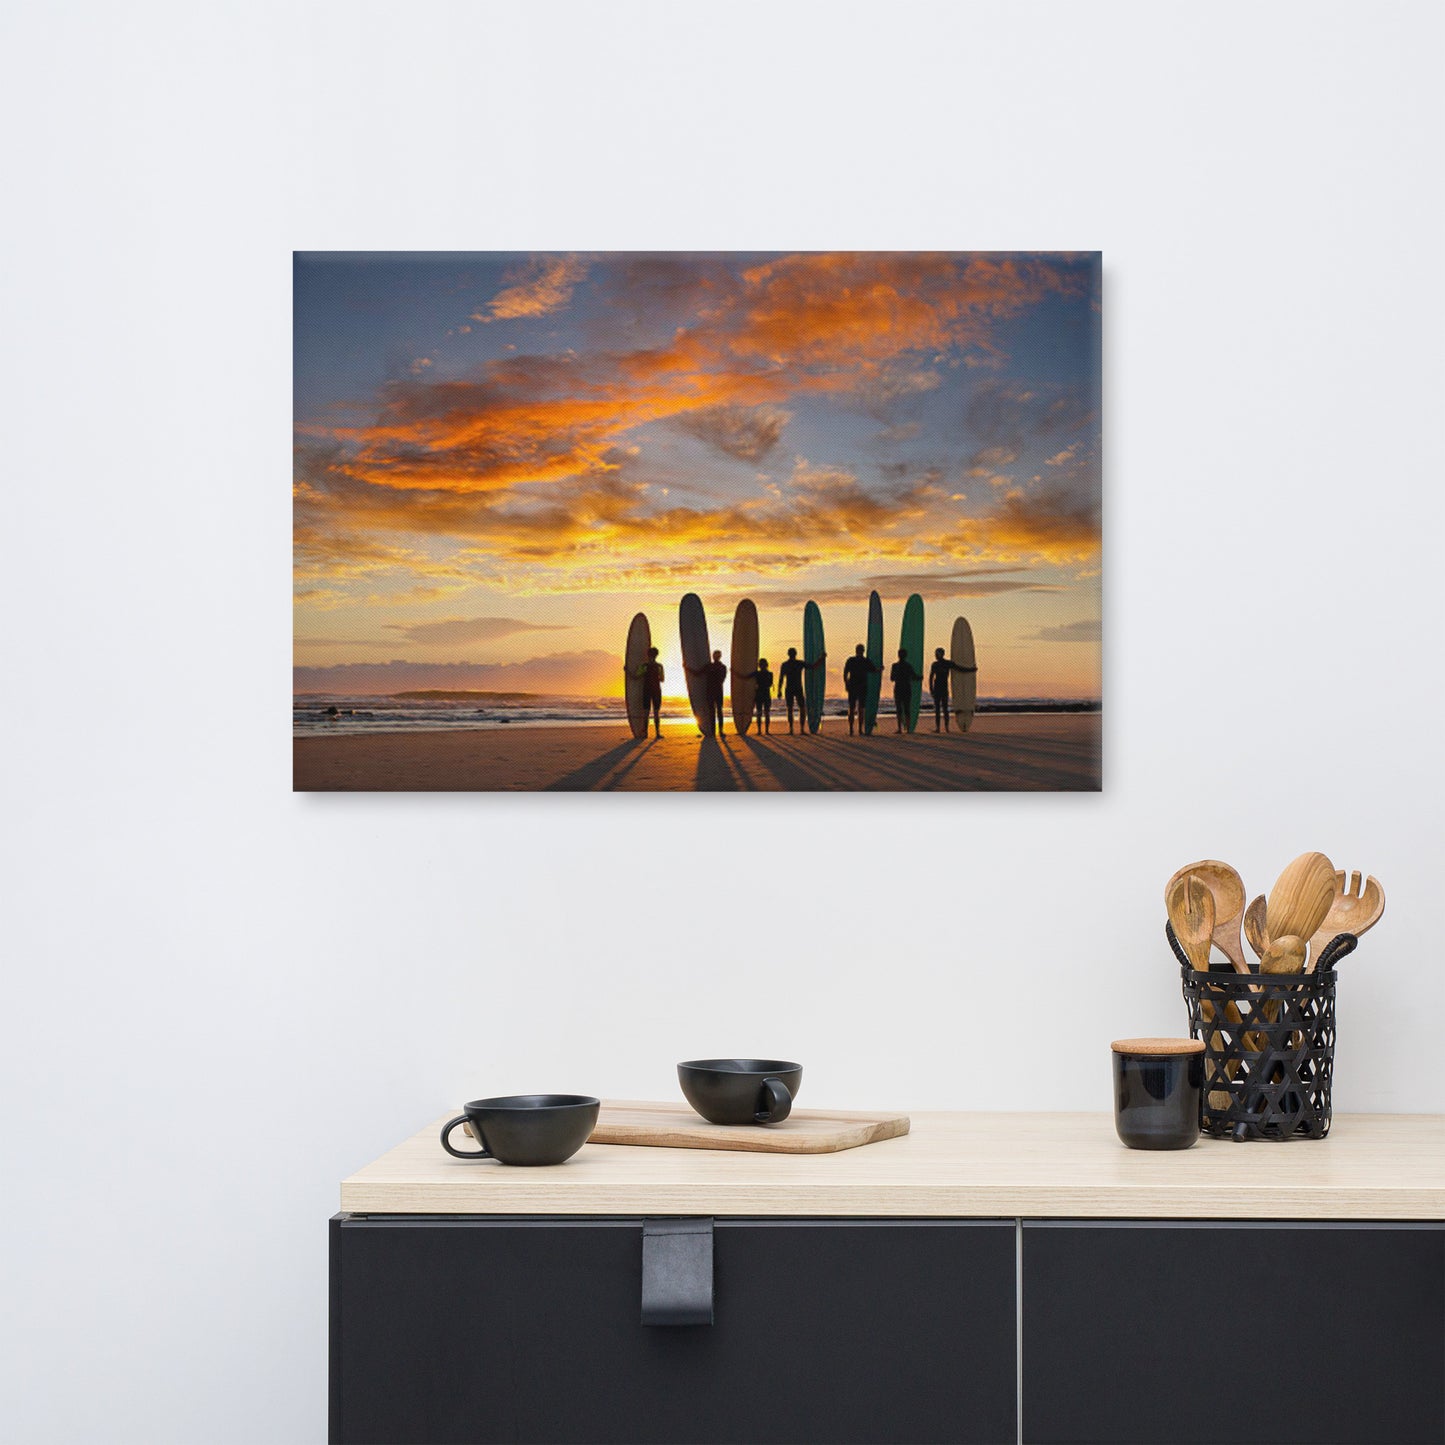 Silhouettes of Stoke: A Malibu Sunrise Coastal Lifestyle Abstract Nature Photograph Canvas Wall Art Print